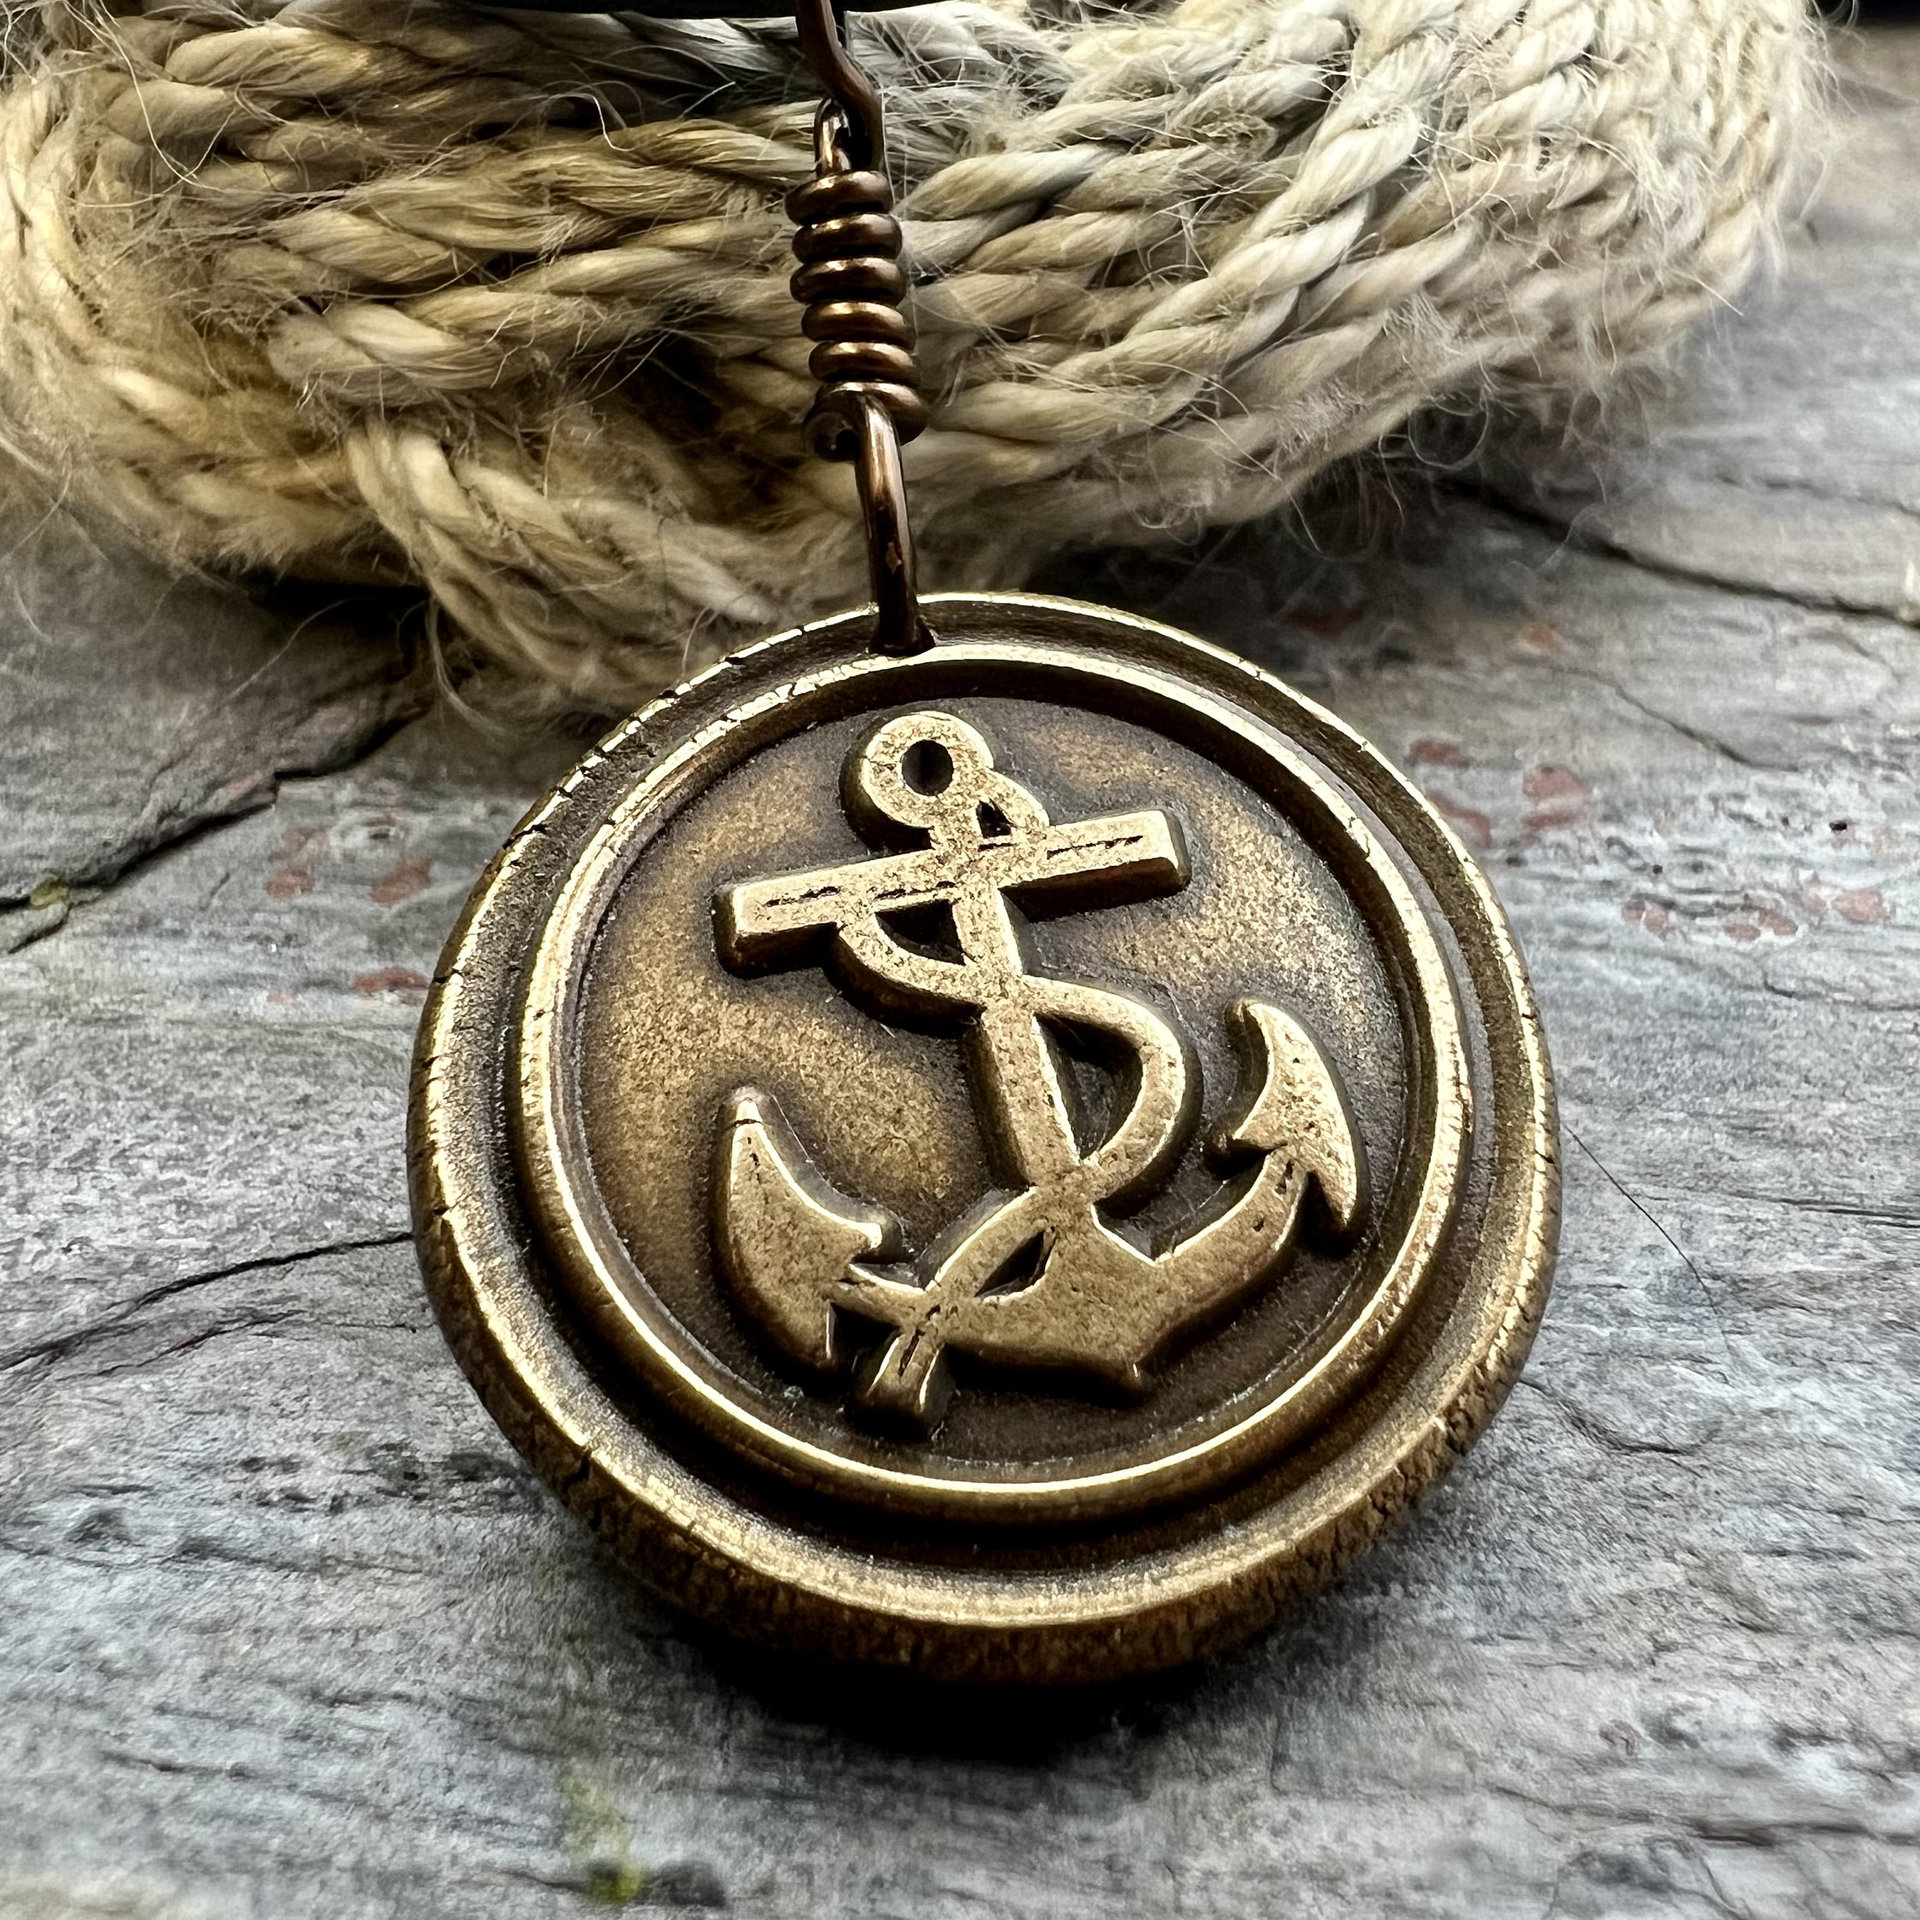 Anchor Charm, Bronze Necklace, Nautical Sailing Sea, Protection Guidance Talisman, Men Women Unisex Jewelry, Rustic Seaworn, Handmade Art